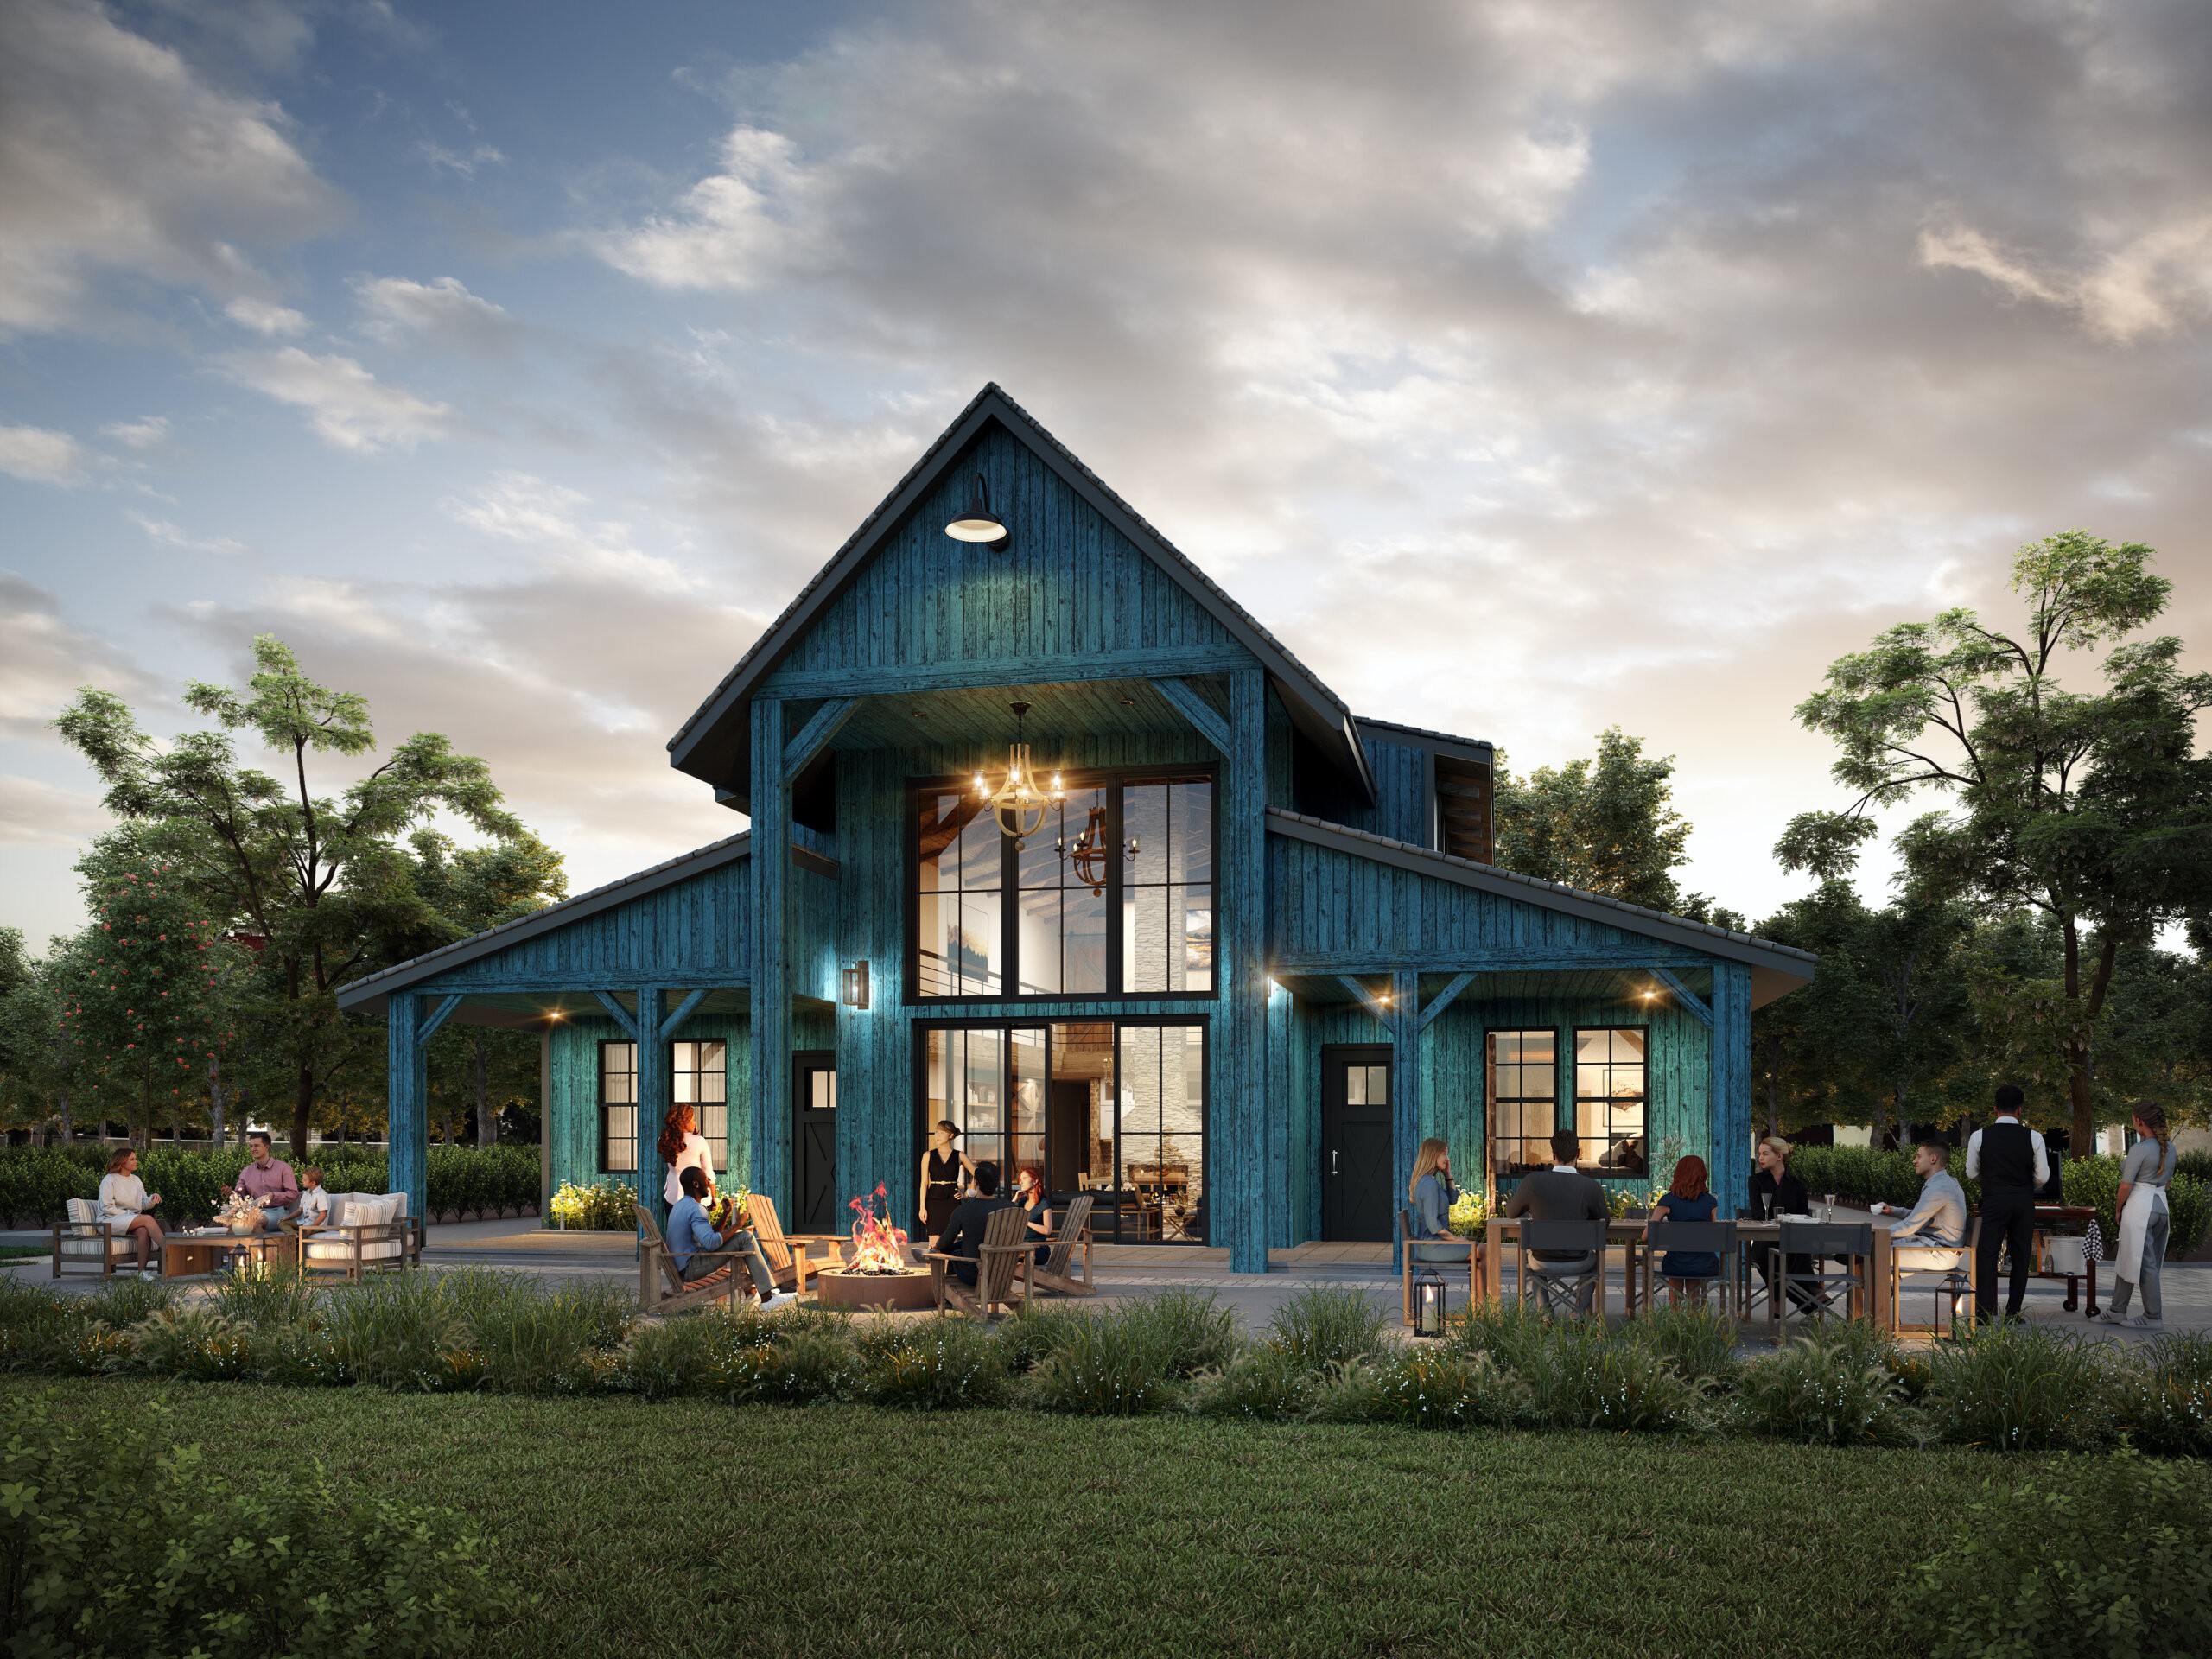 2022 modern beach house design and wooden floor plans